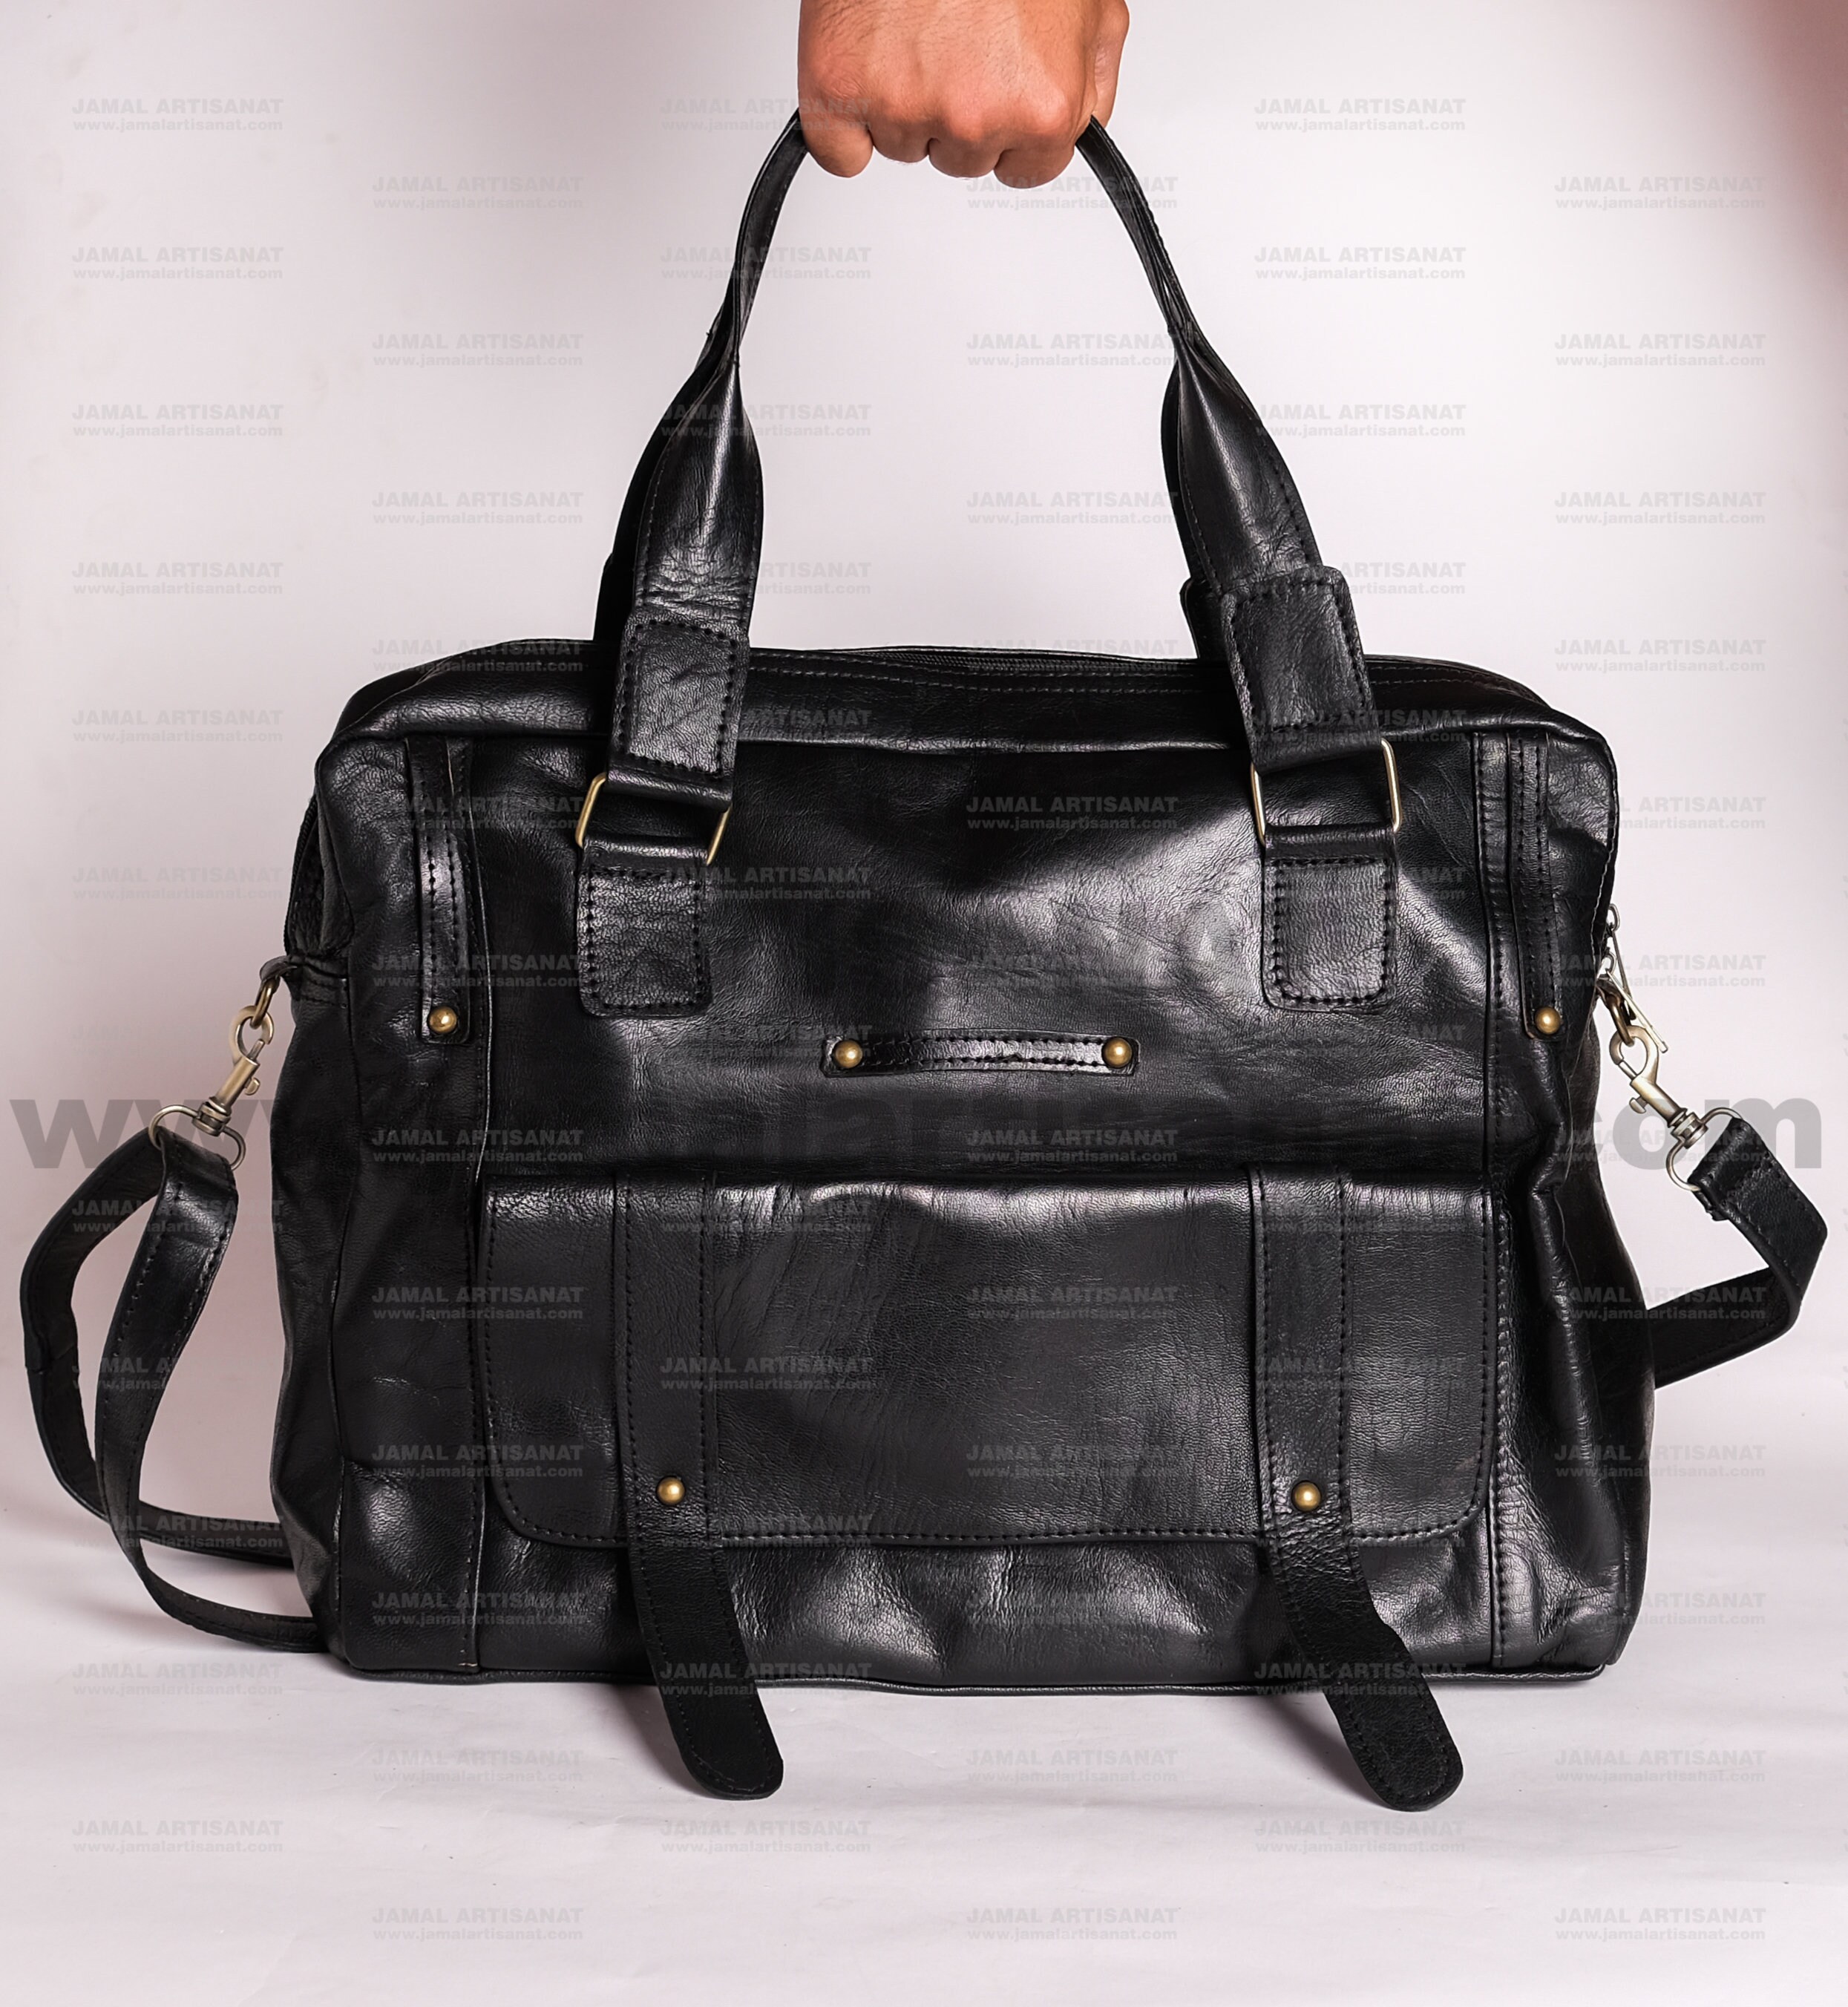 Extra Large Leather Tote, Laptop Bag Black, Leather Laptop Tote, Large Designer Tote Bag for Women